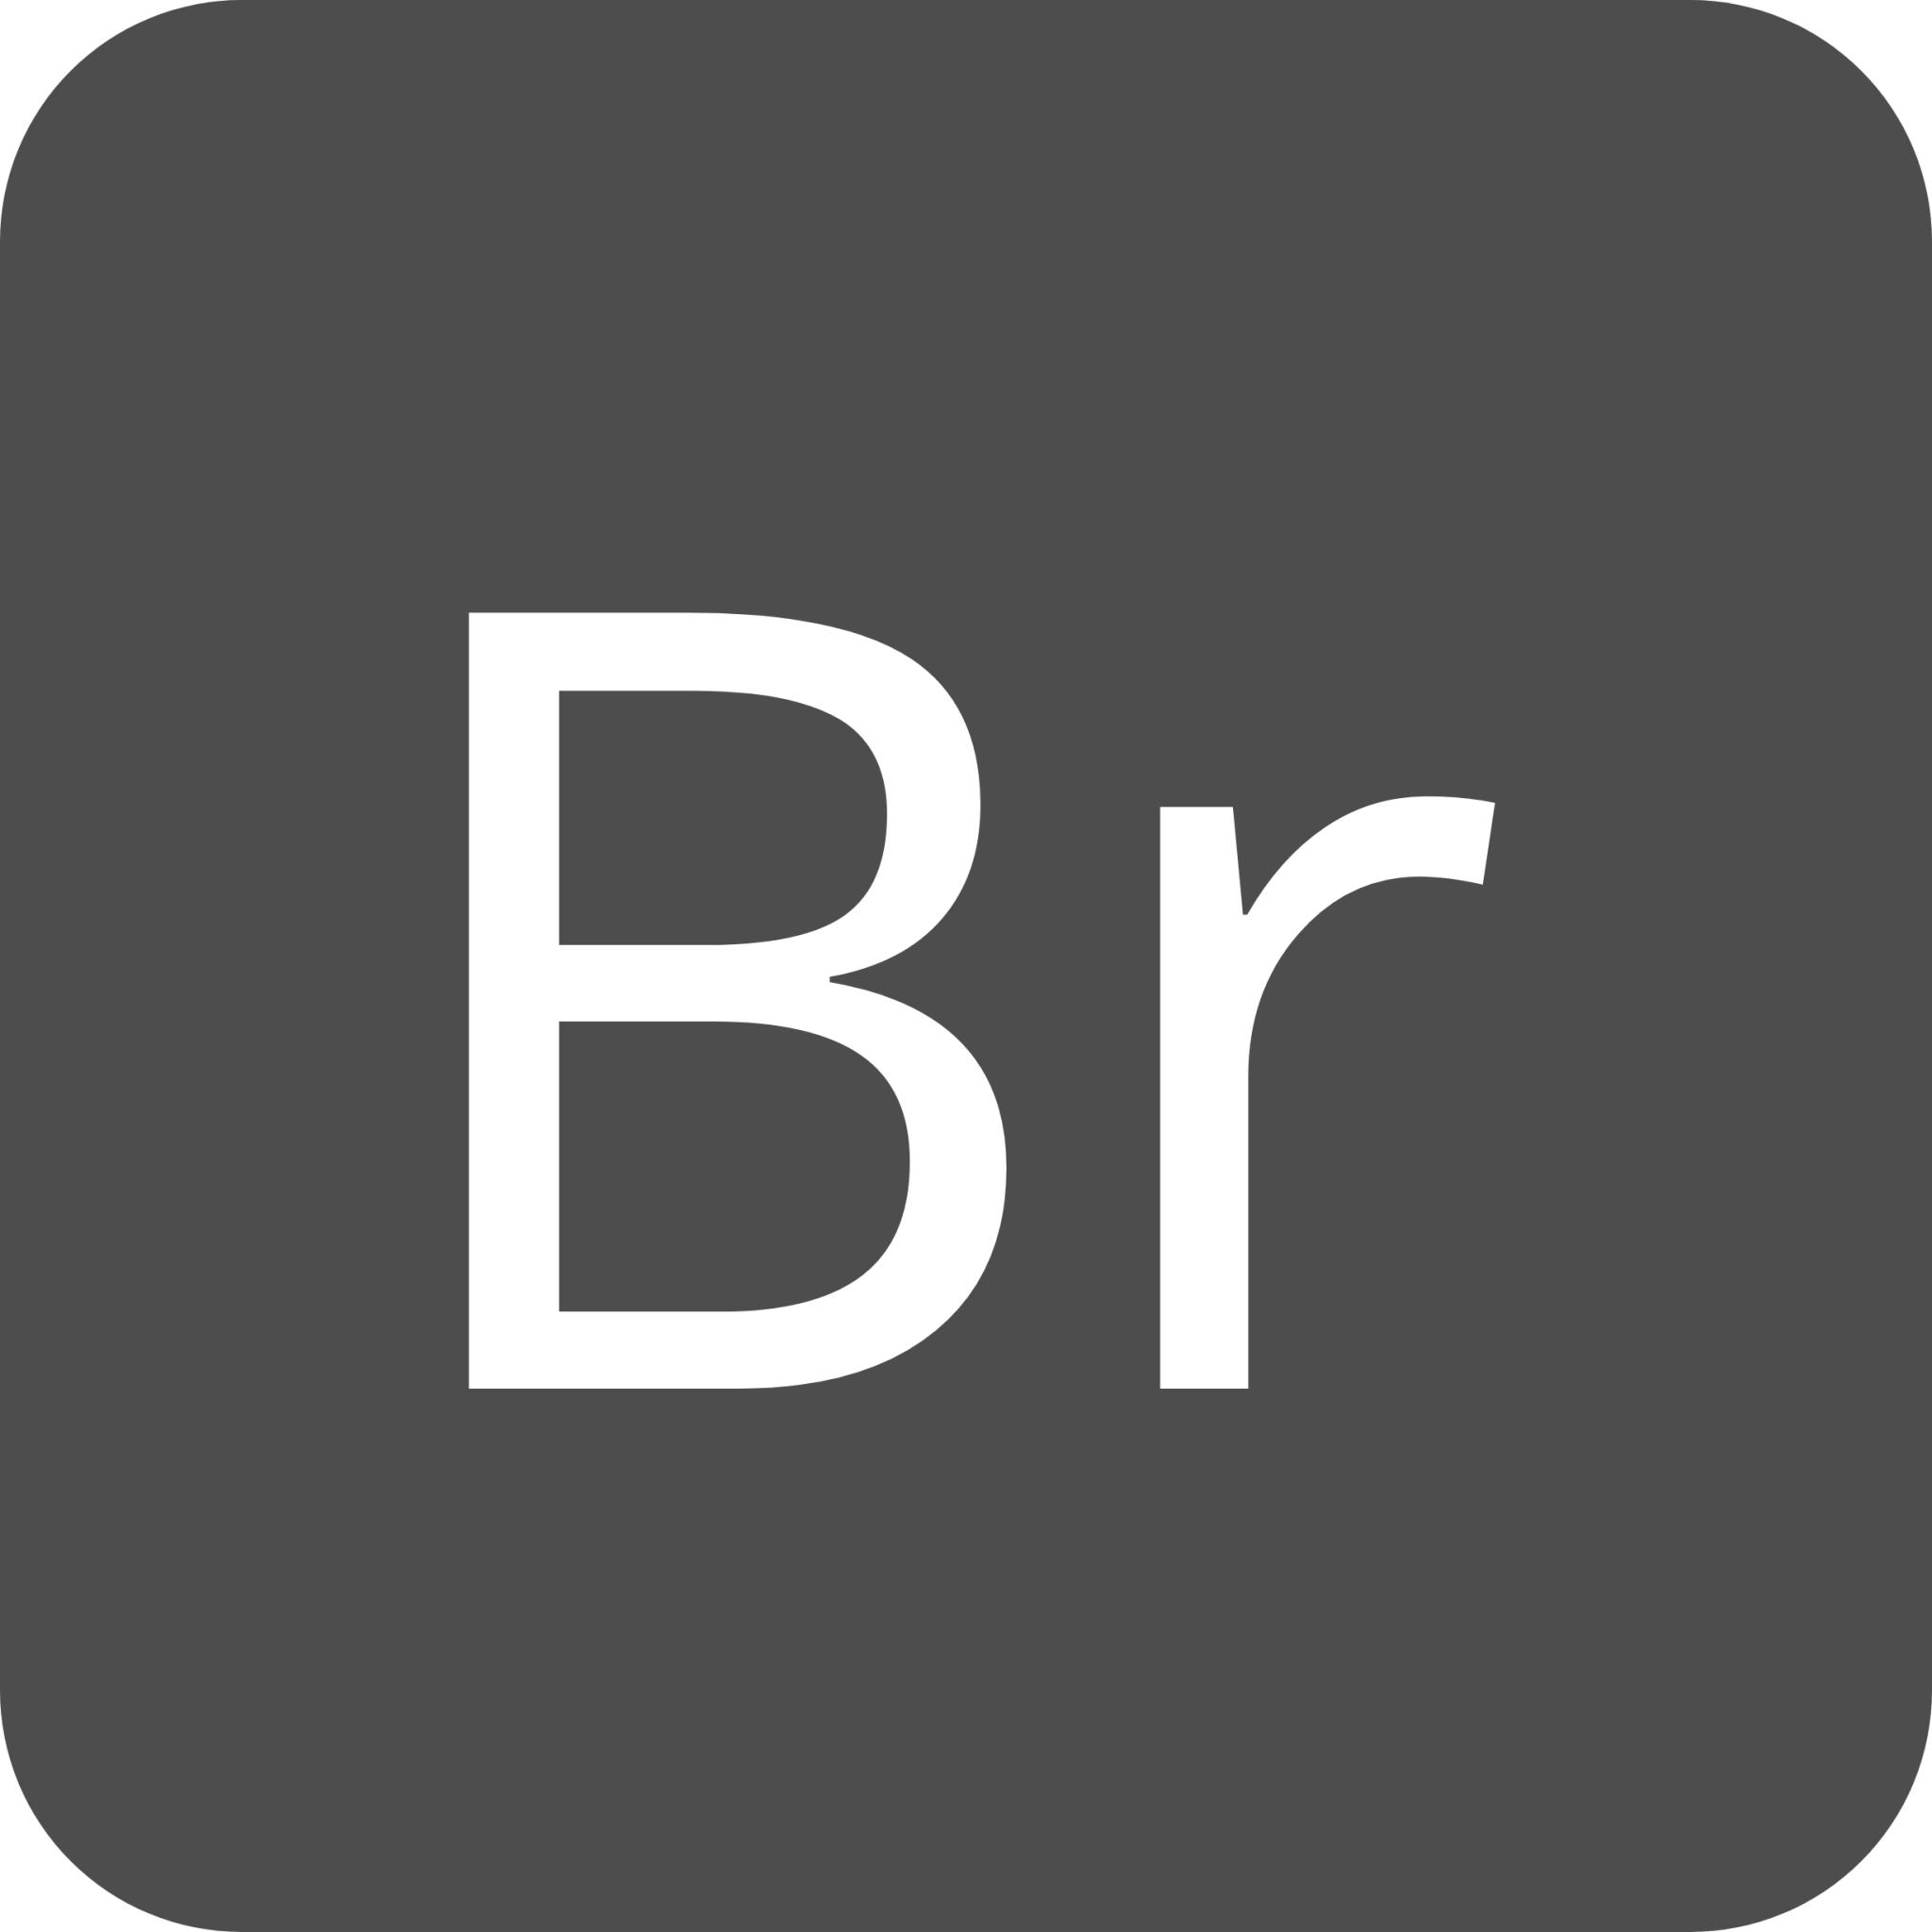 indicator keyboard Br icon